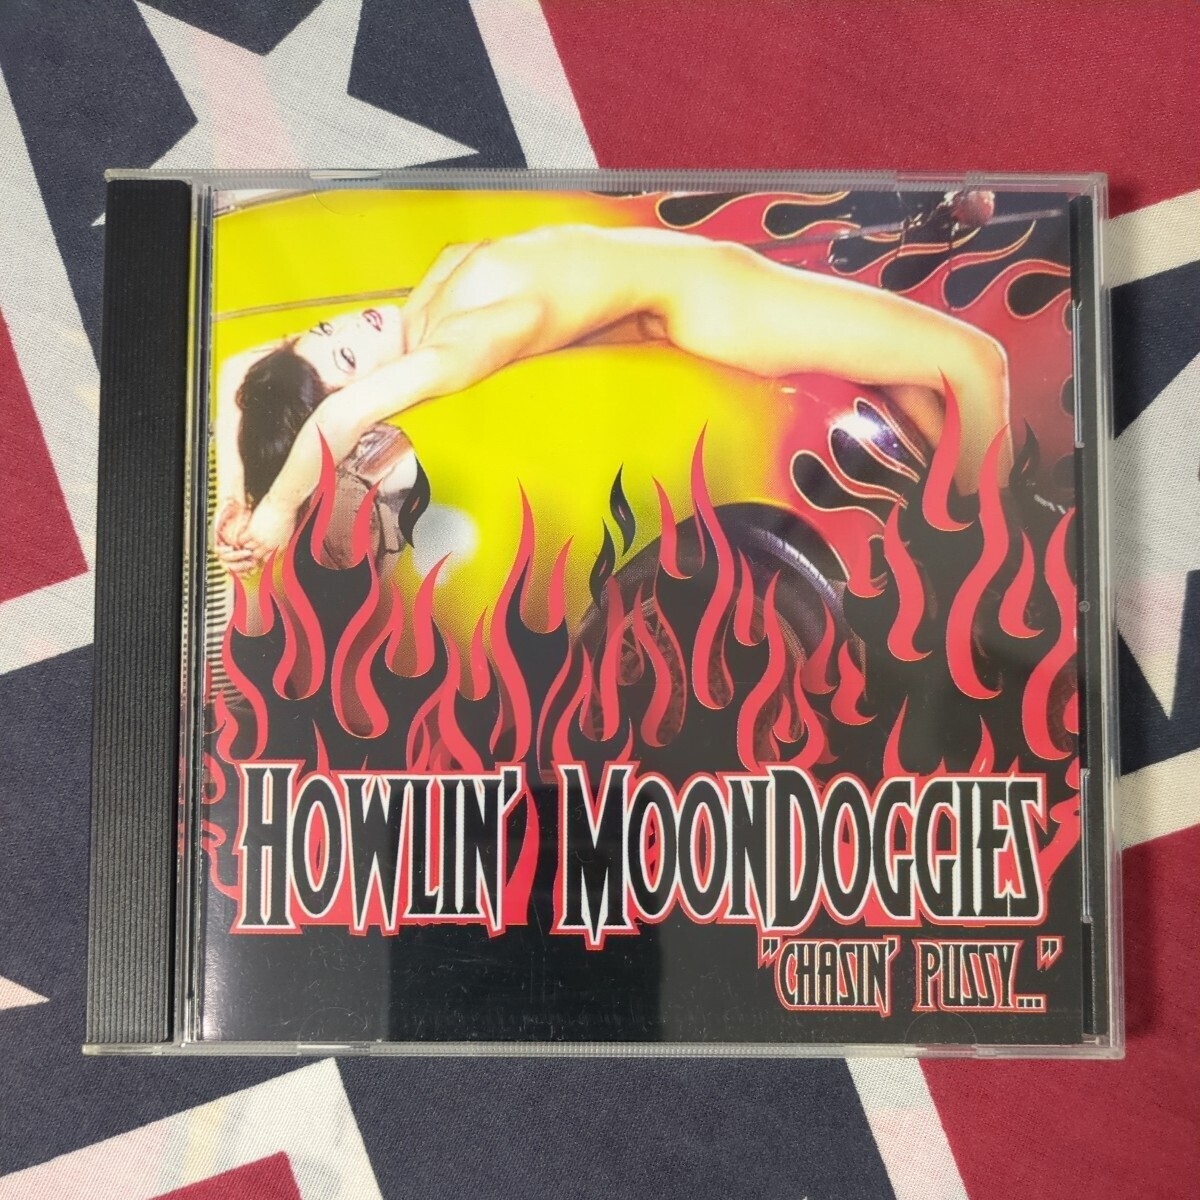 Howlin' Moondoggies / Chasin' Pussy ◆ ネオロカビリー ◆ ネオロカ ◆ サイコビリー ◆ サイコ ◆ Neo Rockabilly◆Psychobilly_画像1